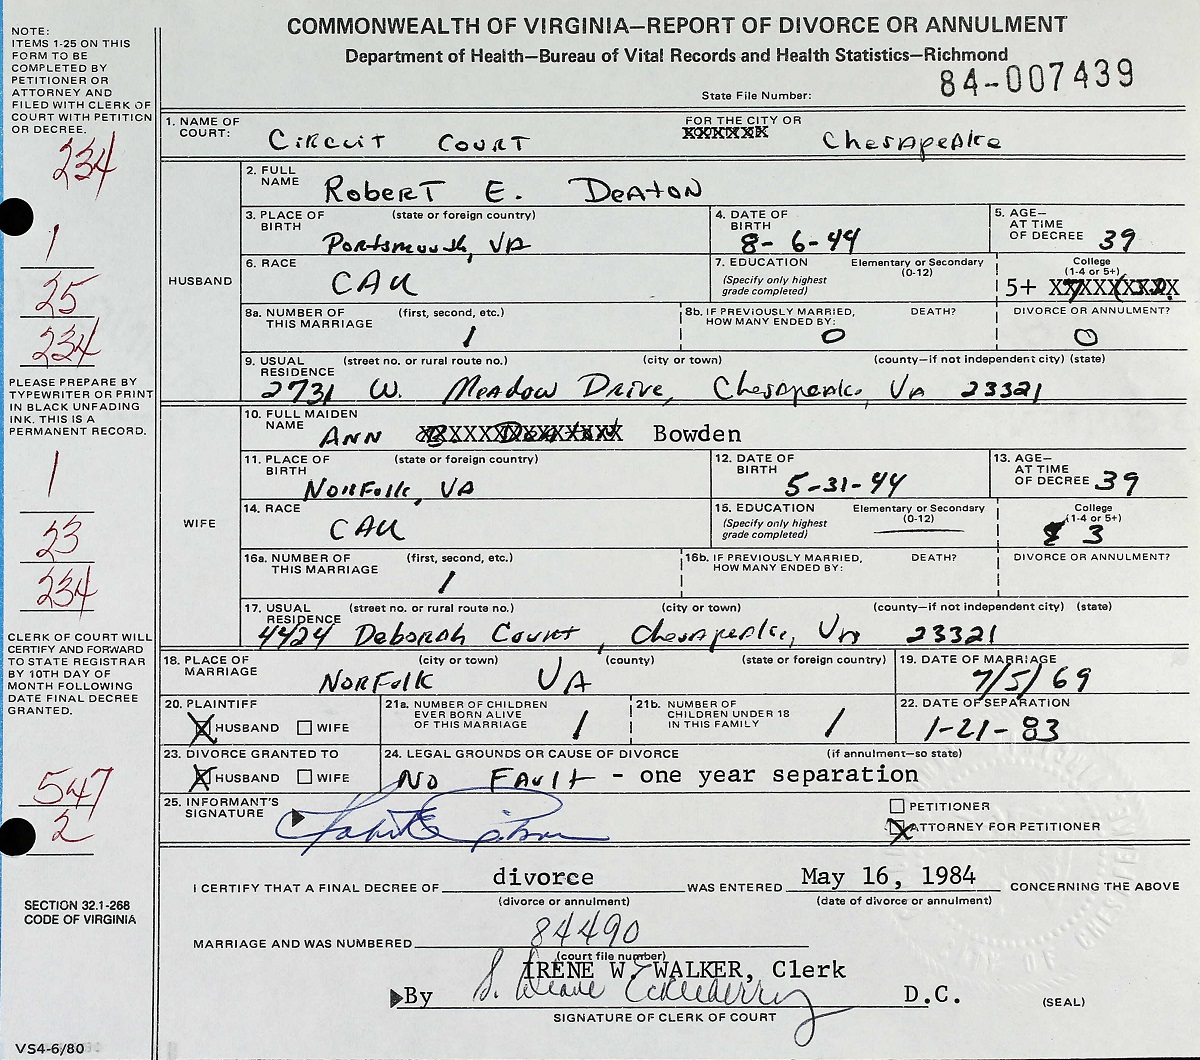 Ann Christine Bruno and Robert Edward Deaton Divorce Certificate